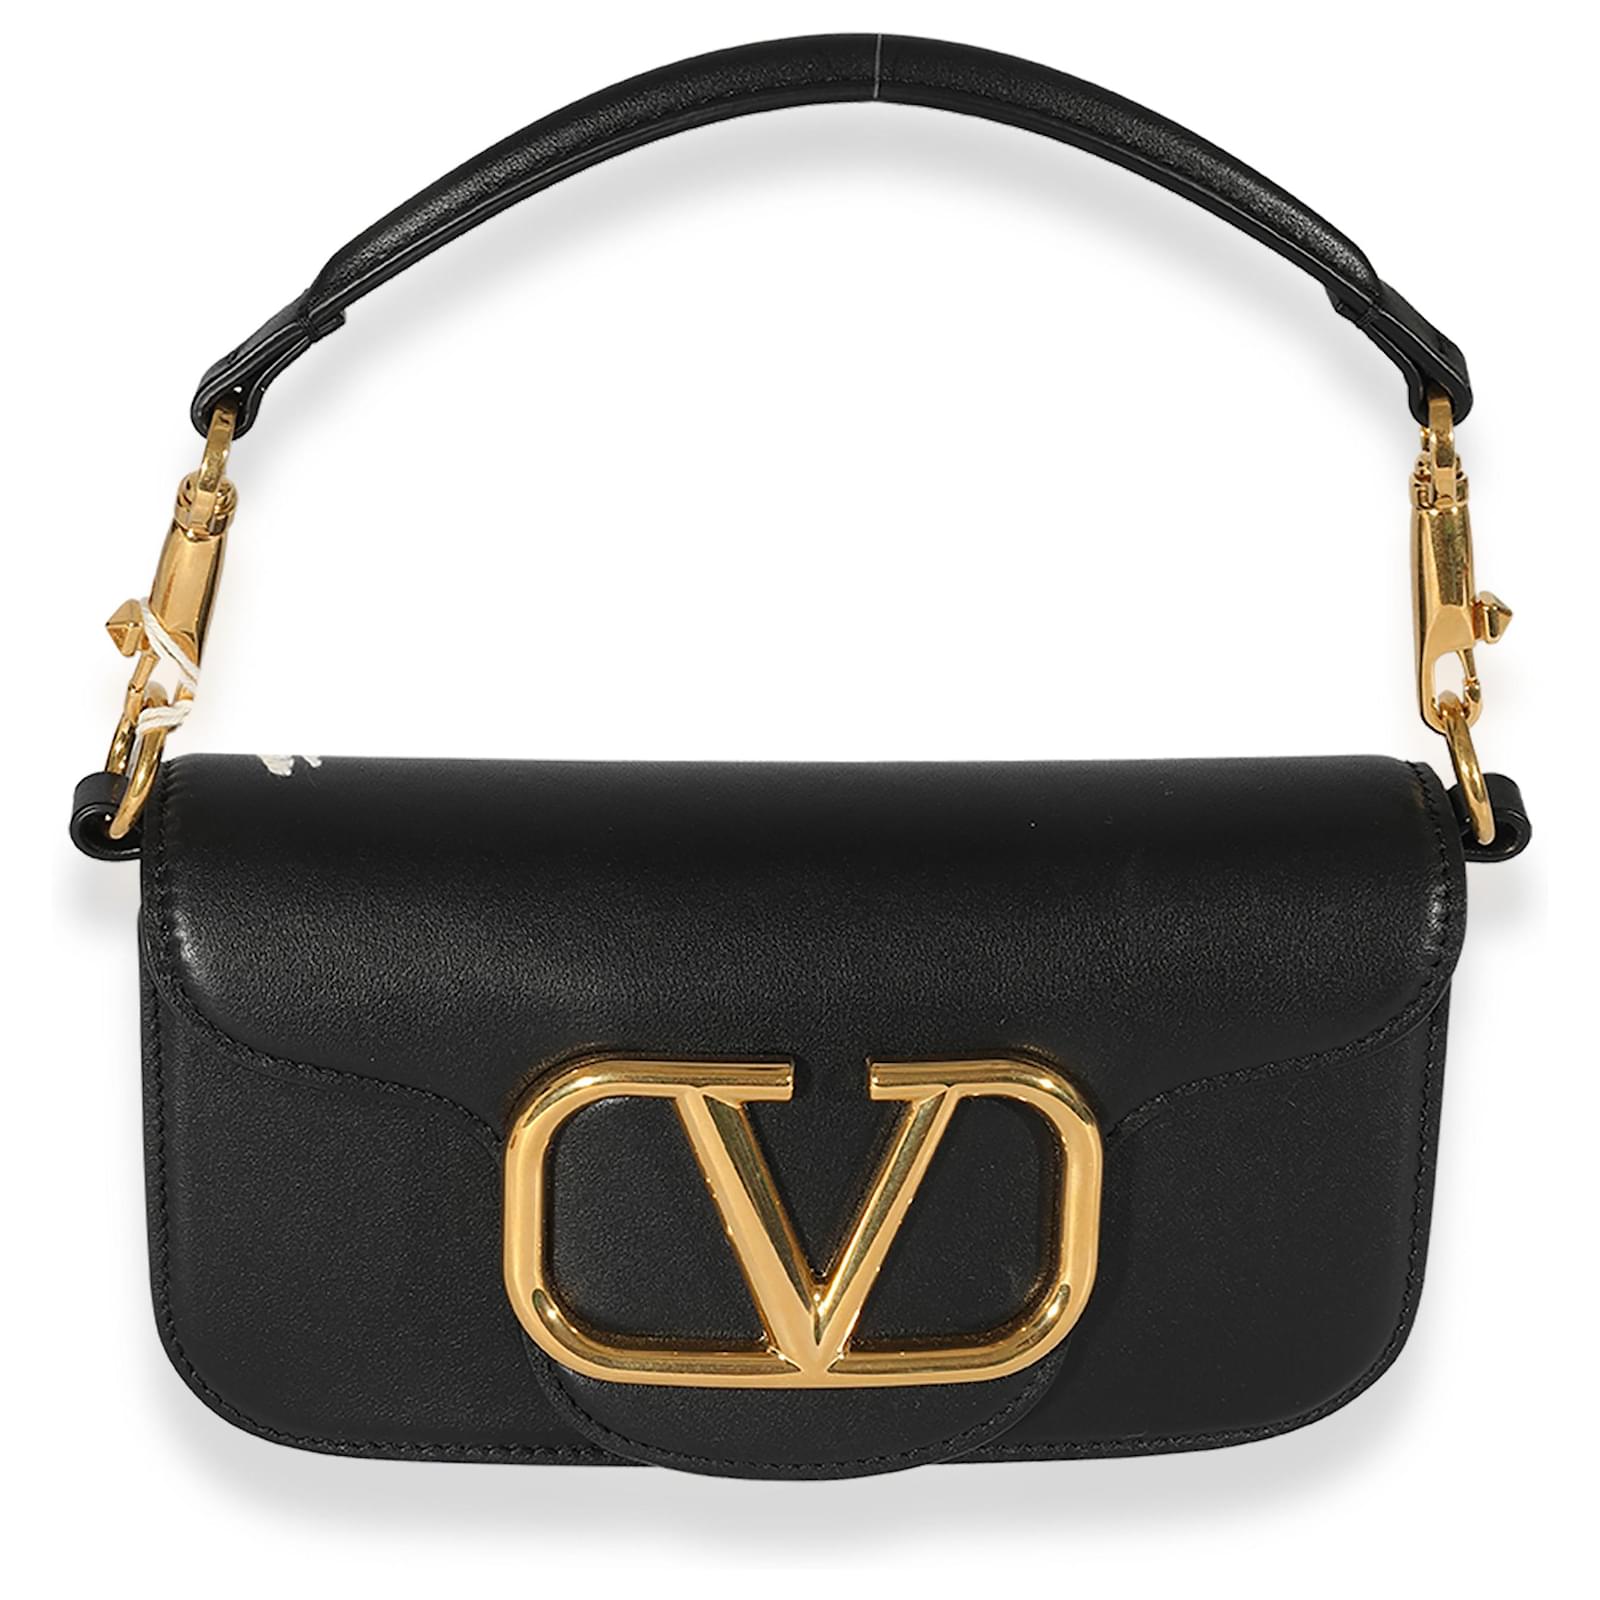 Valentino Loco Small Vlogo Calfskin Shoulder Bag Light Ivory